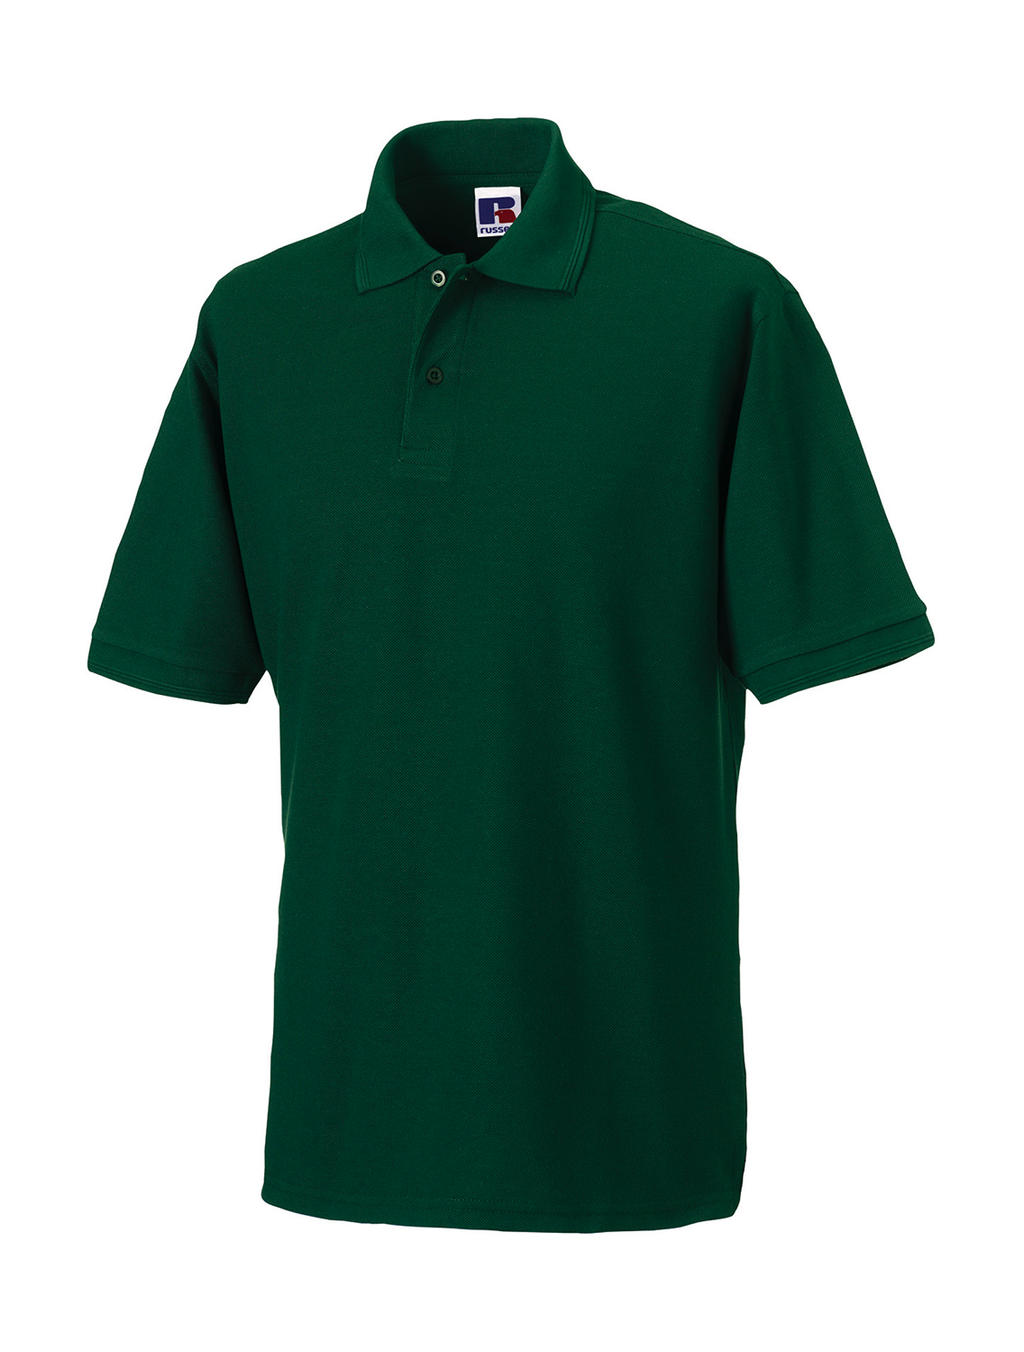 Russel Europe Herren Polo Shirt Polohemd Shirt T-Shirt Polo Kurzarm